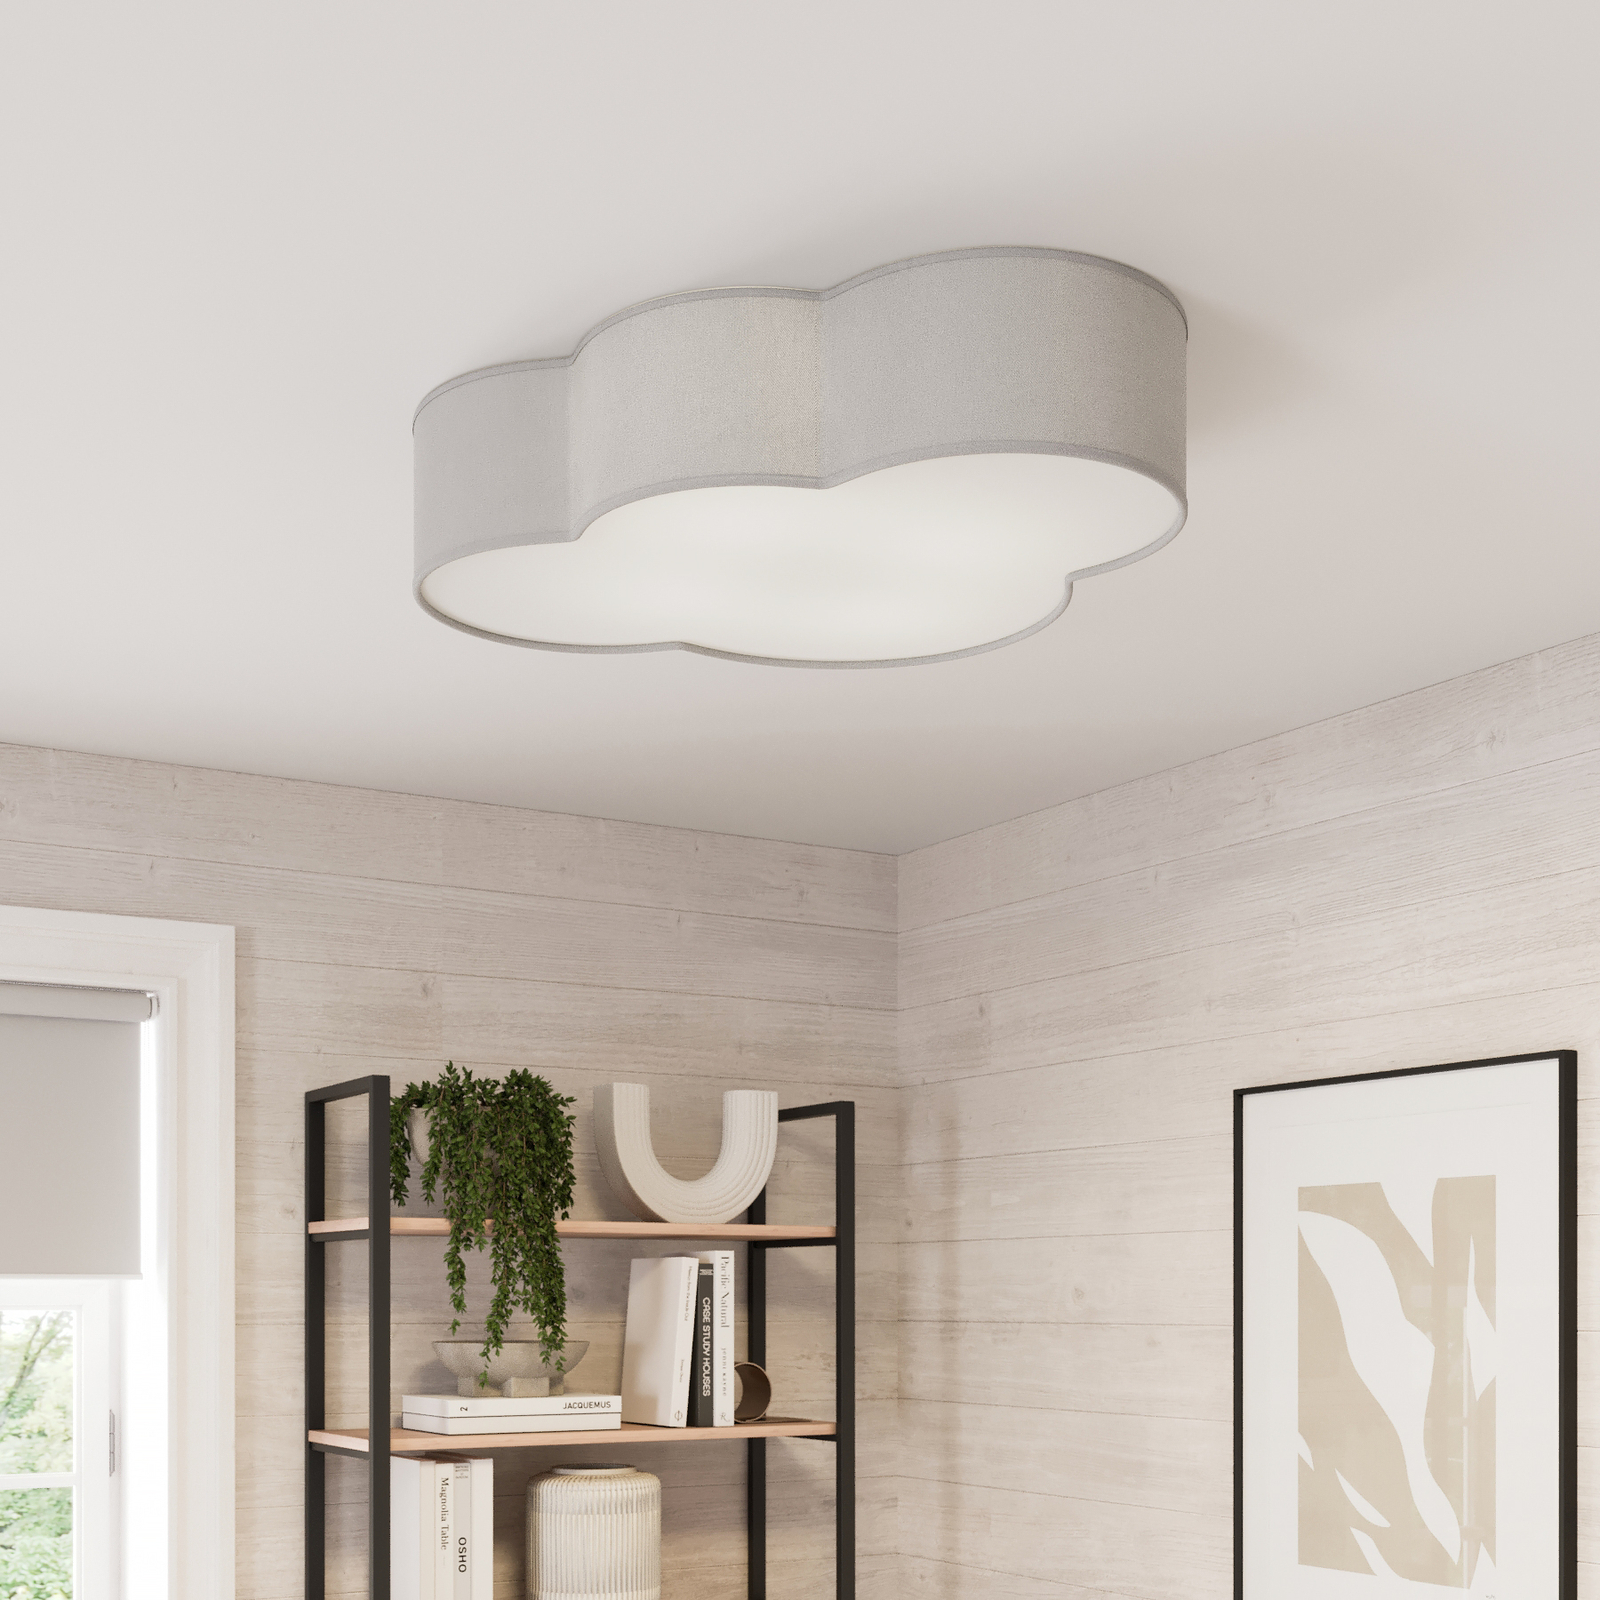 Cloud ceiling light made of textile, length 62 cm, grey